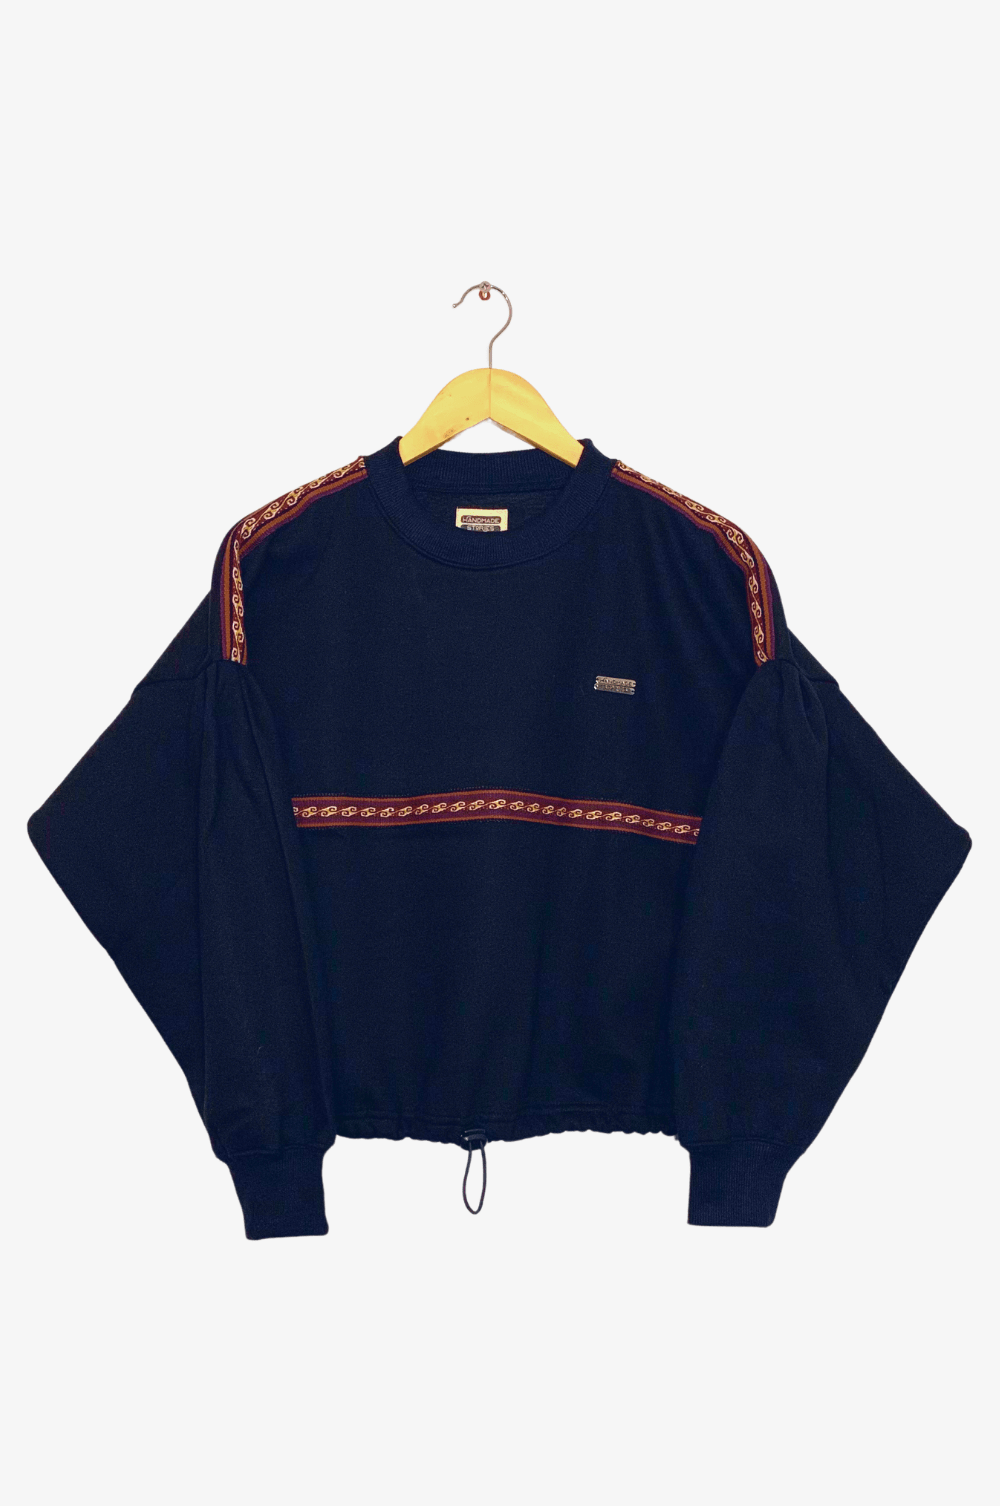 Black oversized sweatshirt with Peruvian motifs